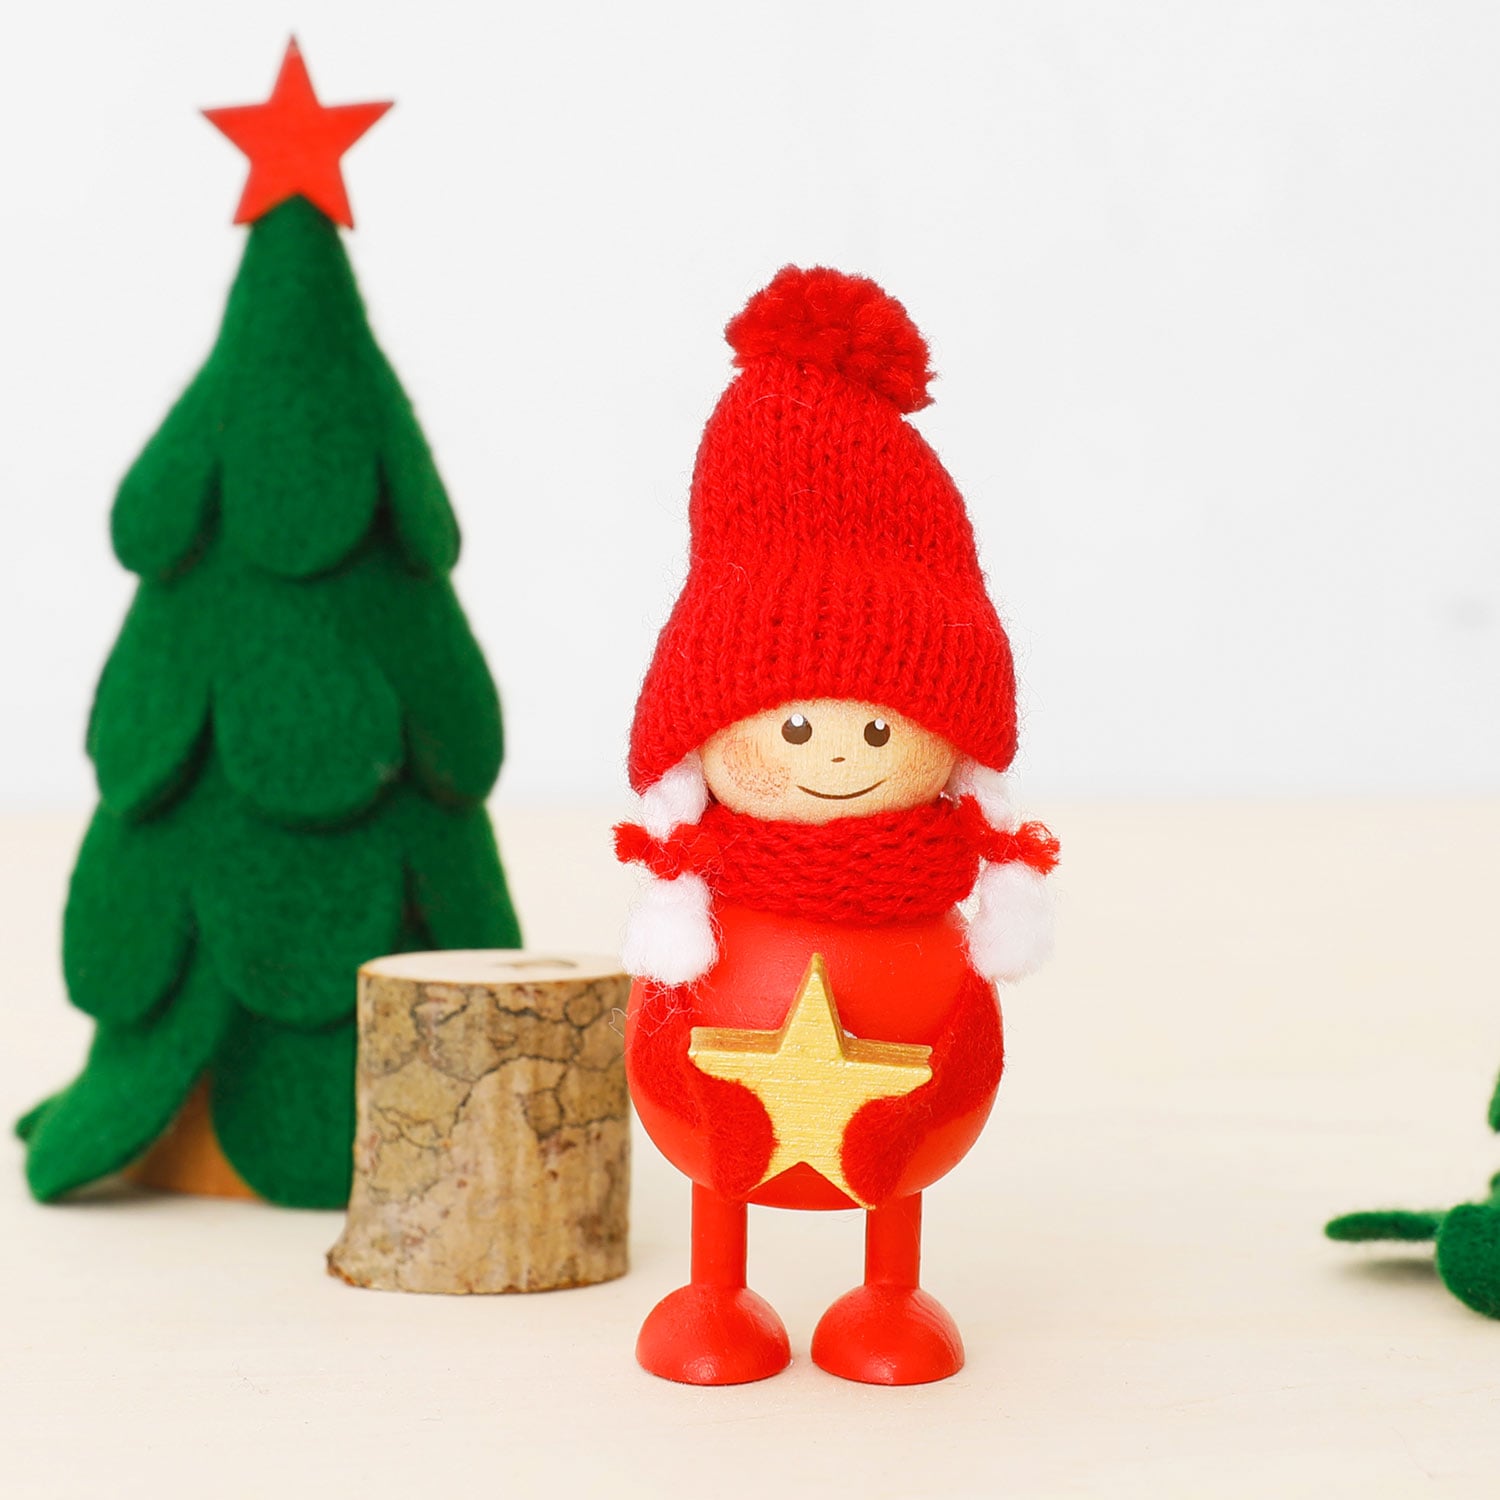 NORDIKA nisse ノルディカ ニッセ 人形 星を抱えた女の子 クリスマス オブジェ 飾り 木製 北欧 雑貨 置物 プレゼント ギフト